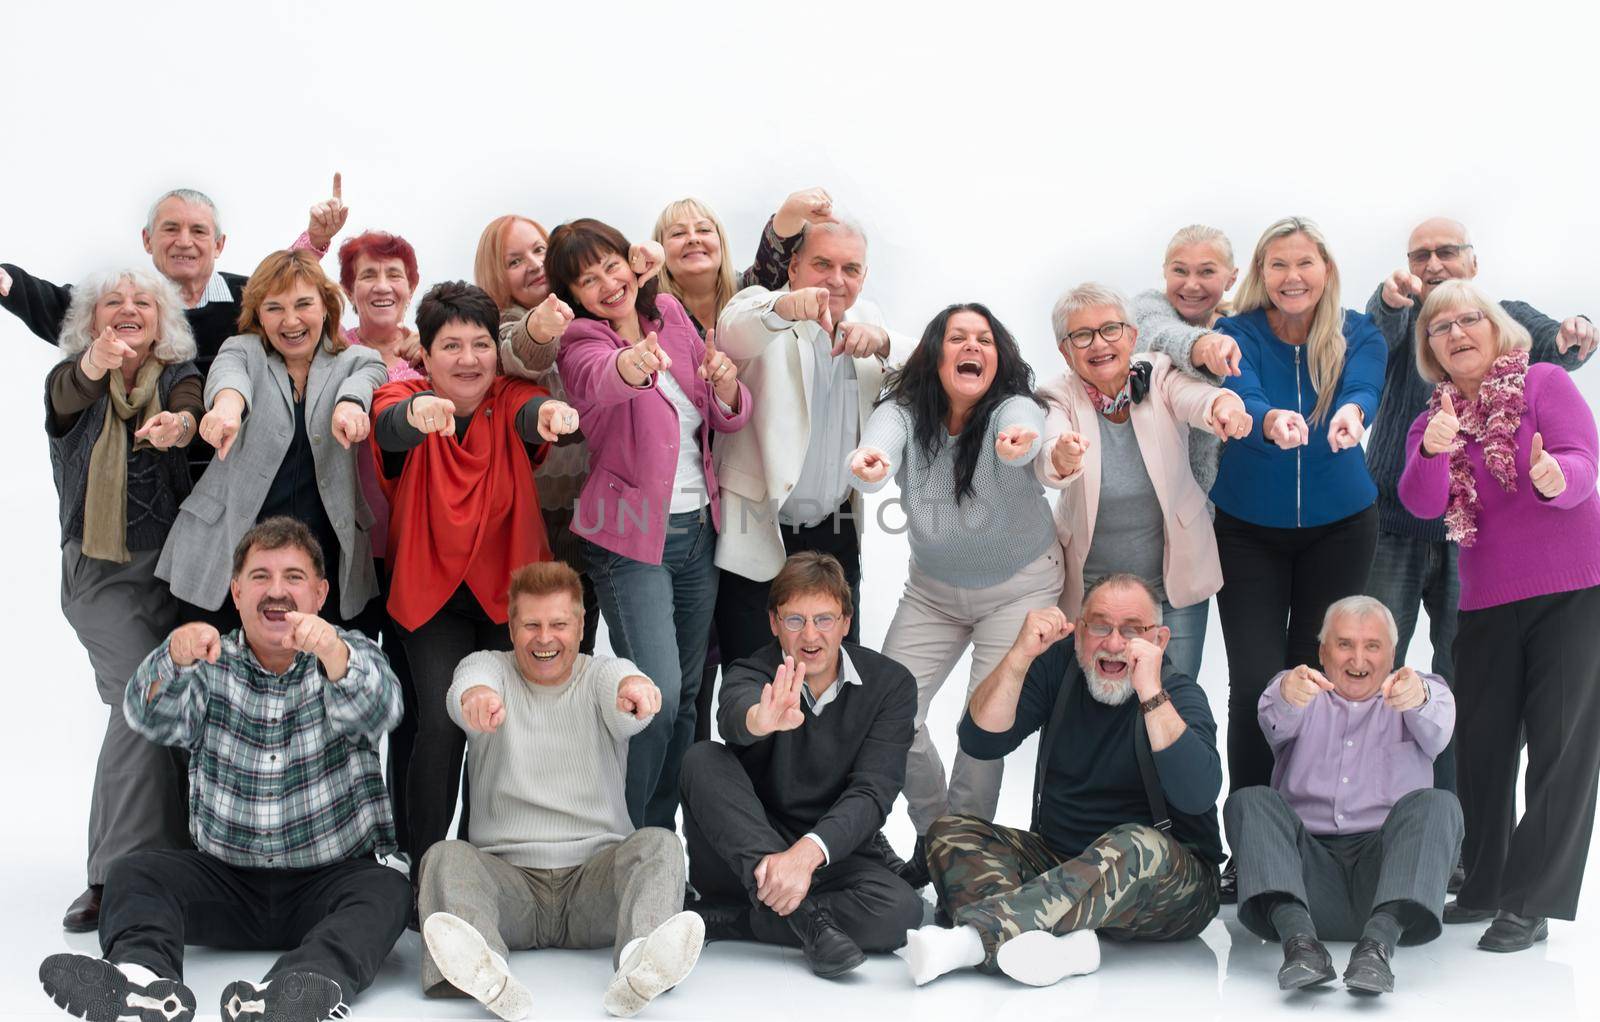 Group of senior people joyfulness concept by asdf